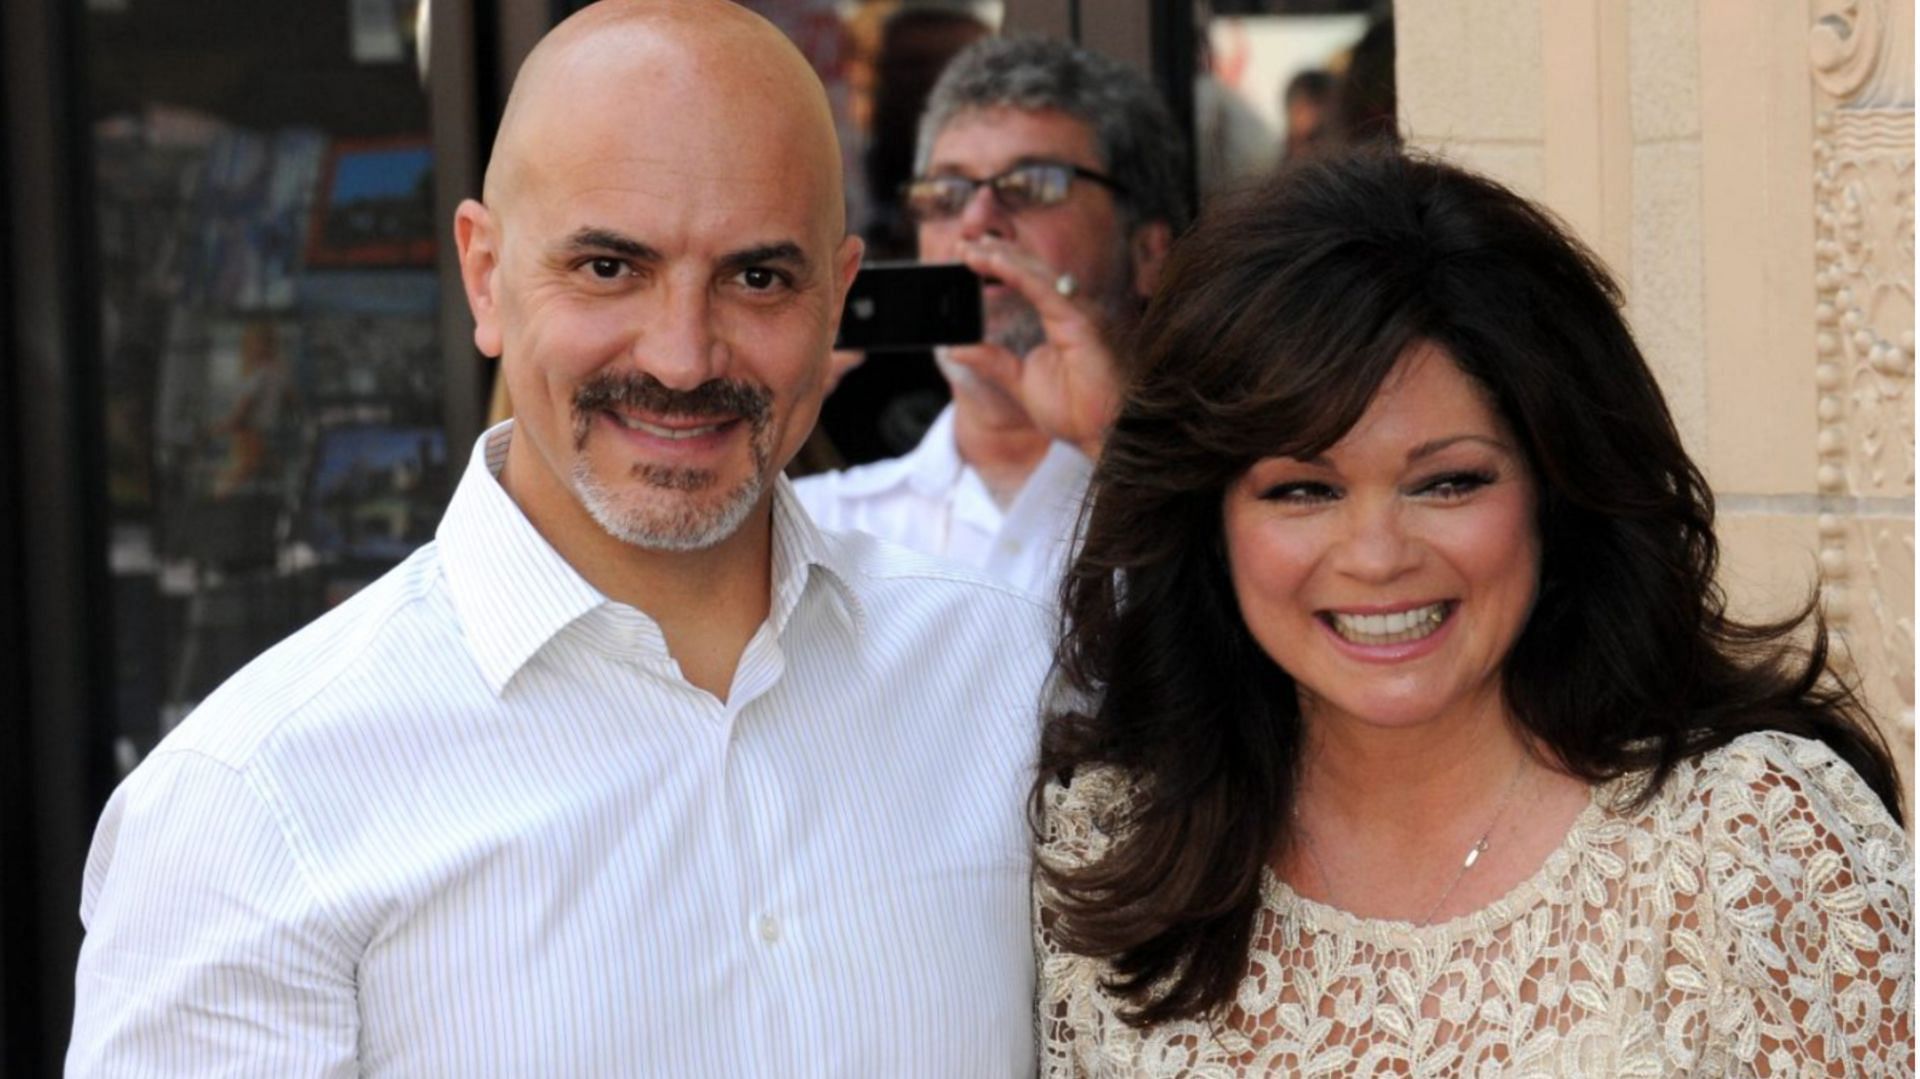 Valerie Bertinelli and Tom Vitale tied the knot in 2011. (Image via Getty Images/Albert L. Ortega)